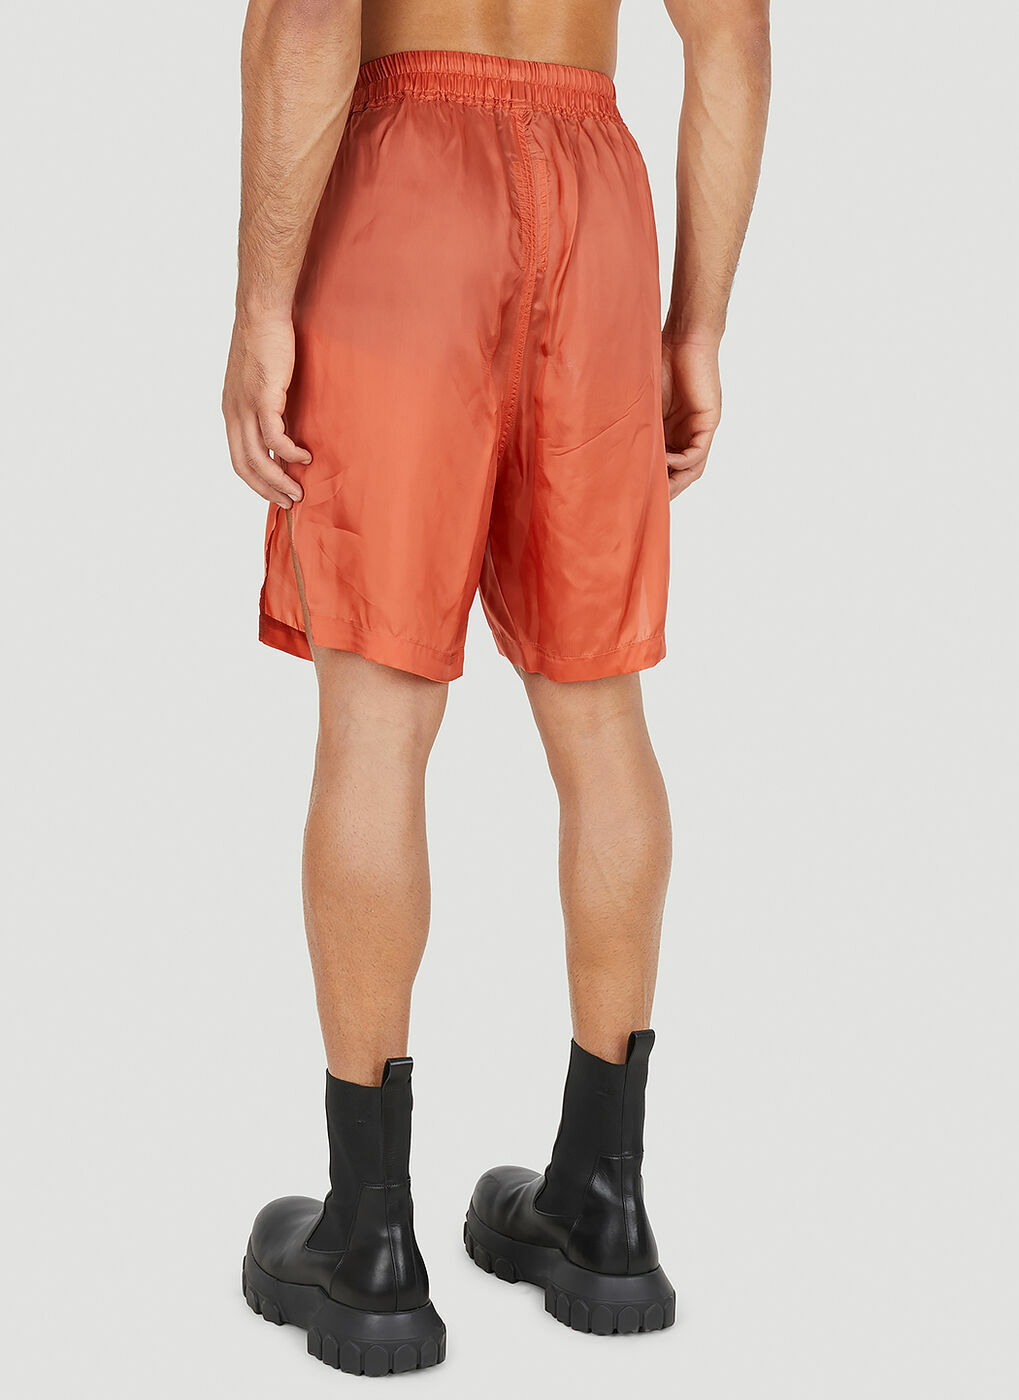 Penta Shorts in Orange